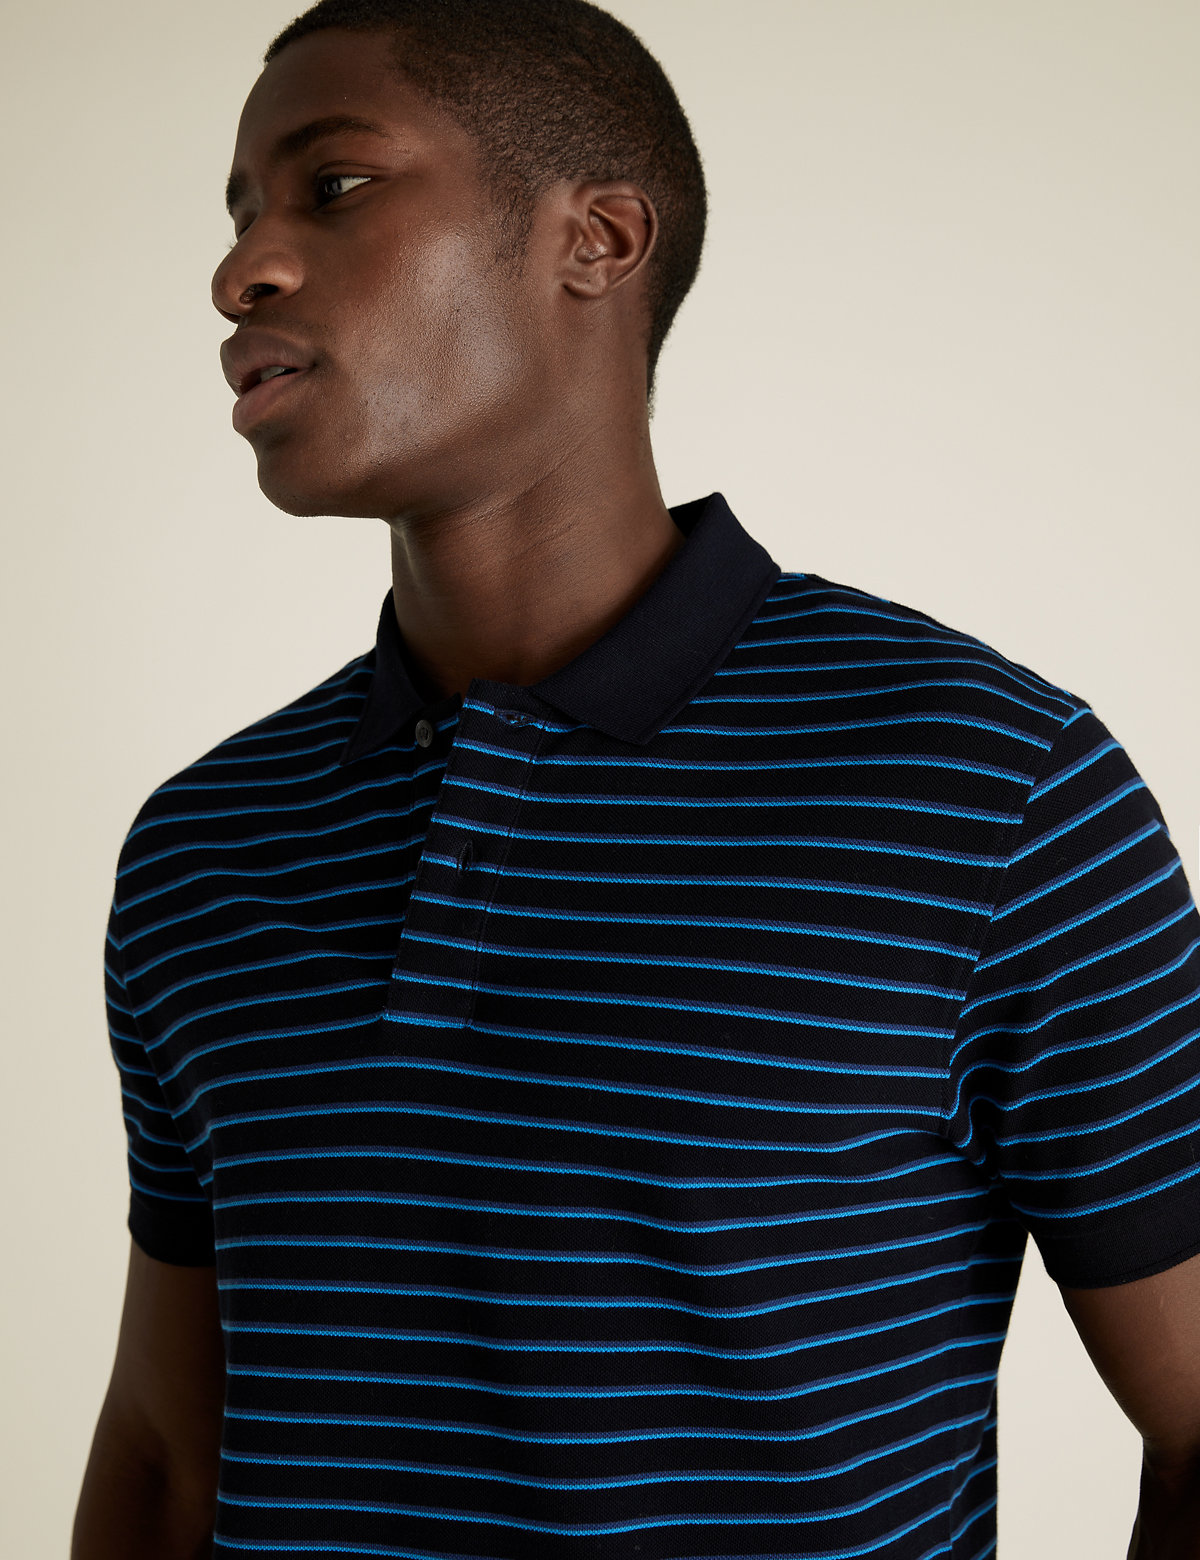 Pure Cotton Pique Striped Polo Shirt.